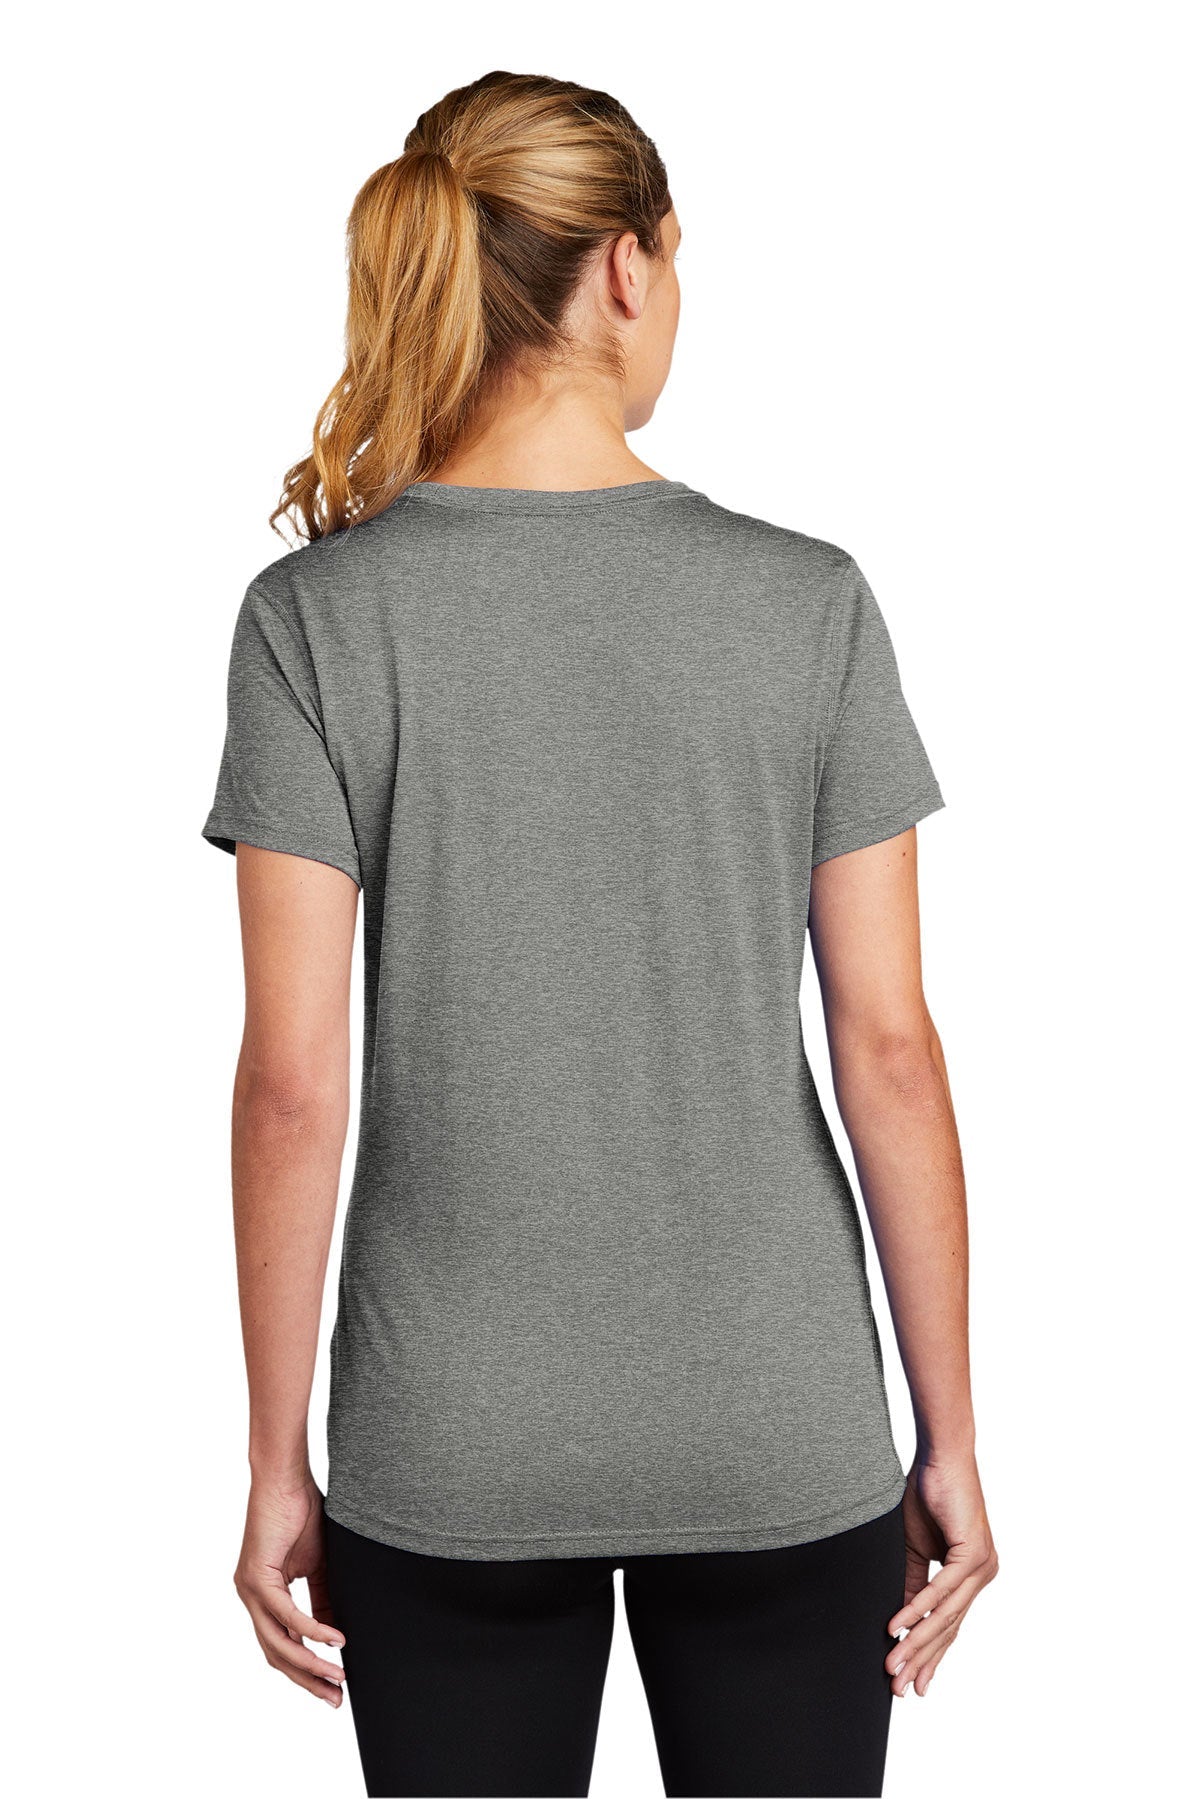 Nike Ladies Legend Customized T-Shirts, Carbon Heather